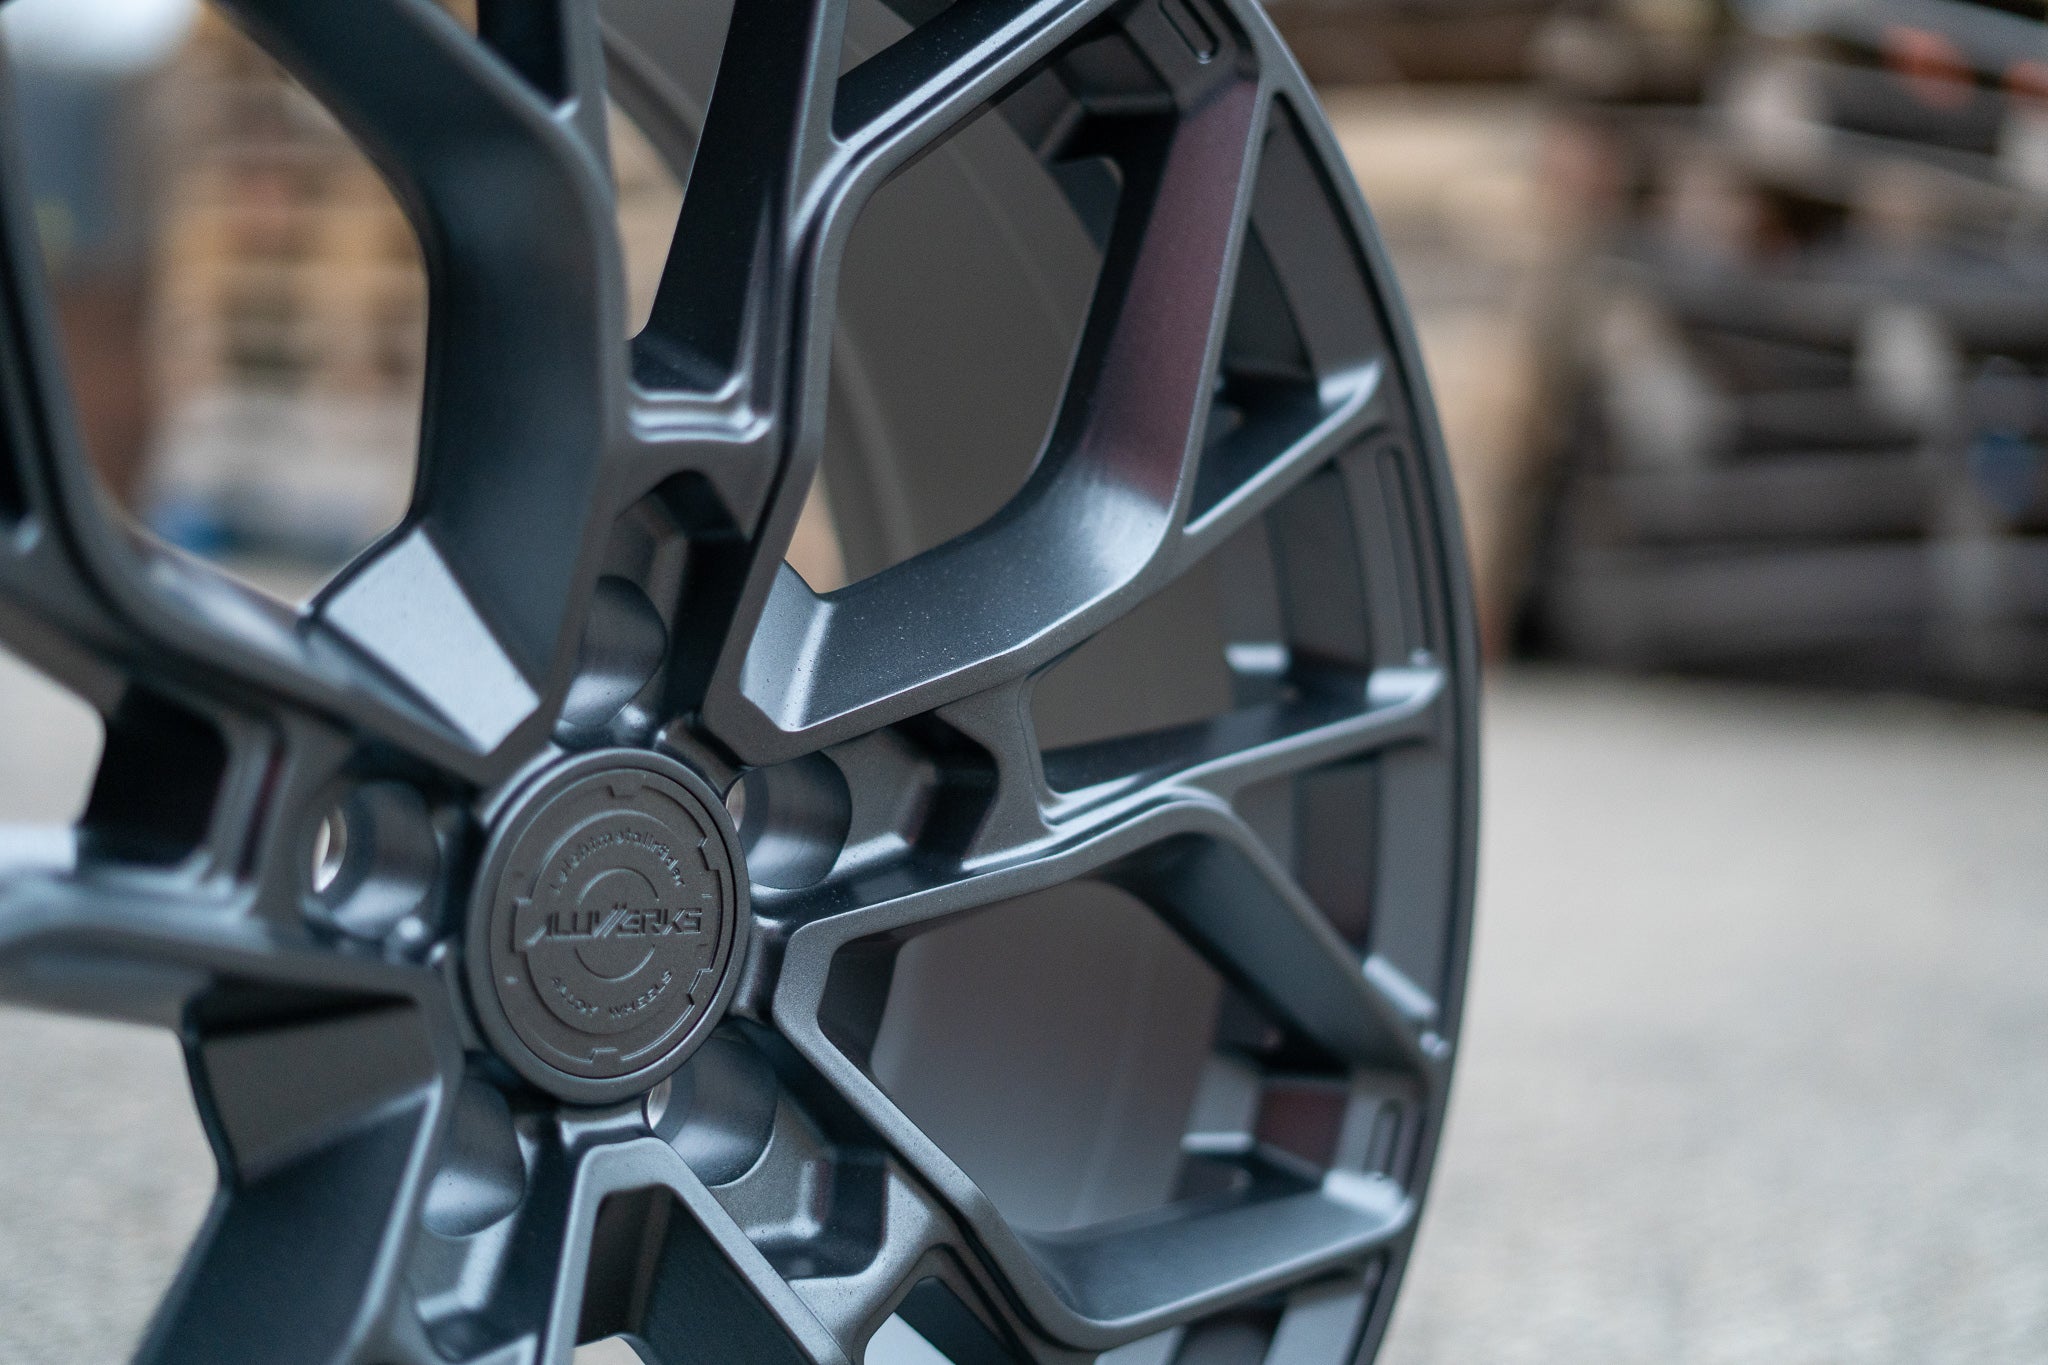 18” Aluwerks XT1-XL wheels  Magneto grey fits Audi BMW Mercedes VW Ford Vauxhall LOAD RATED 1000KG